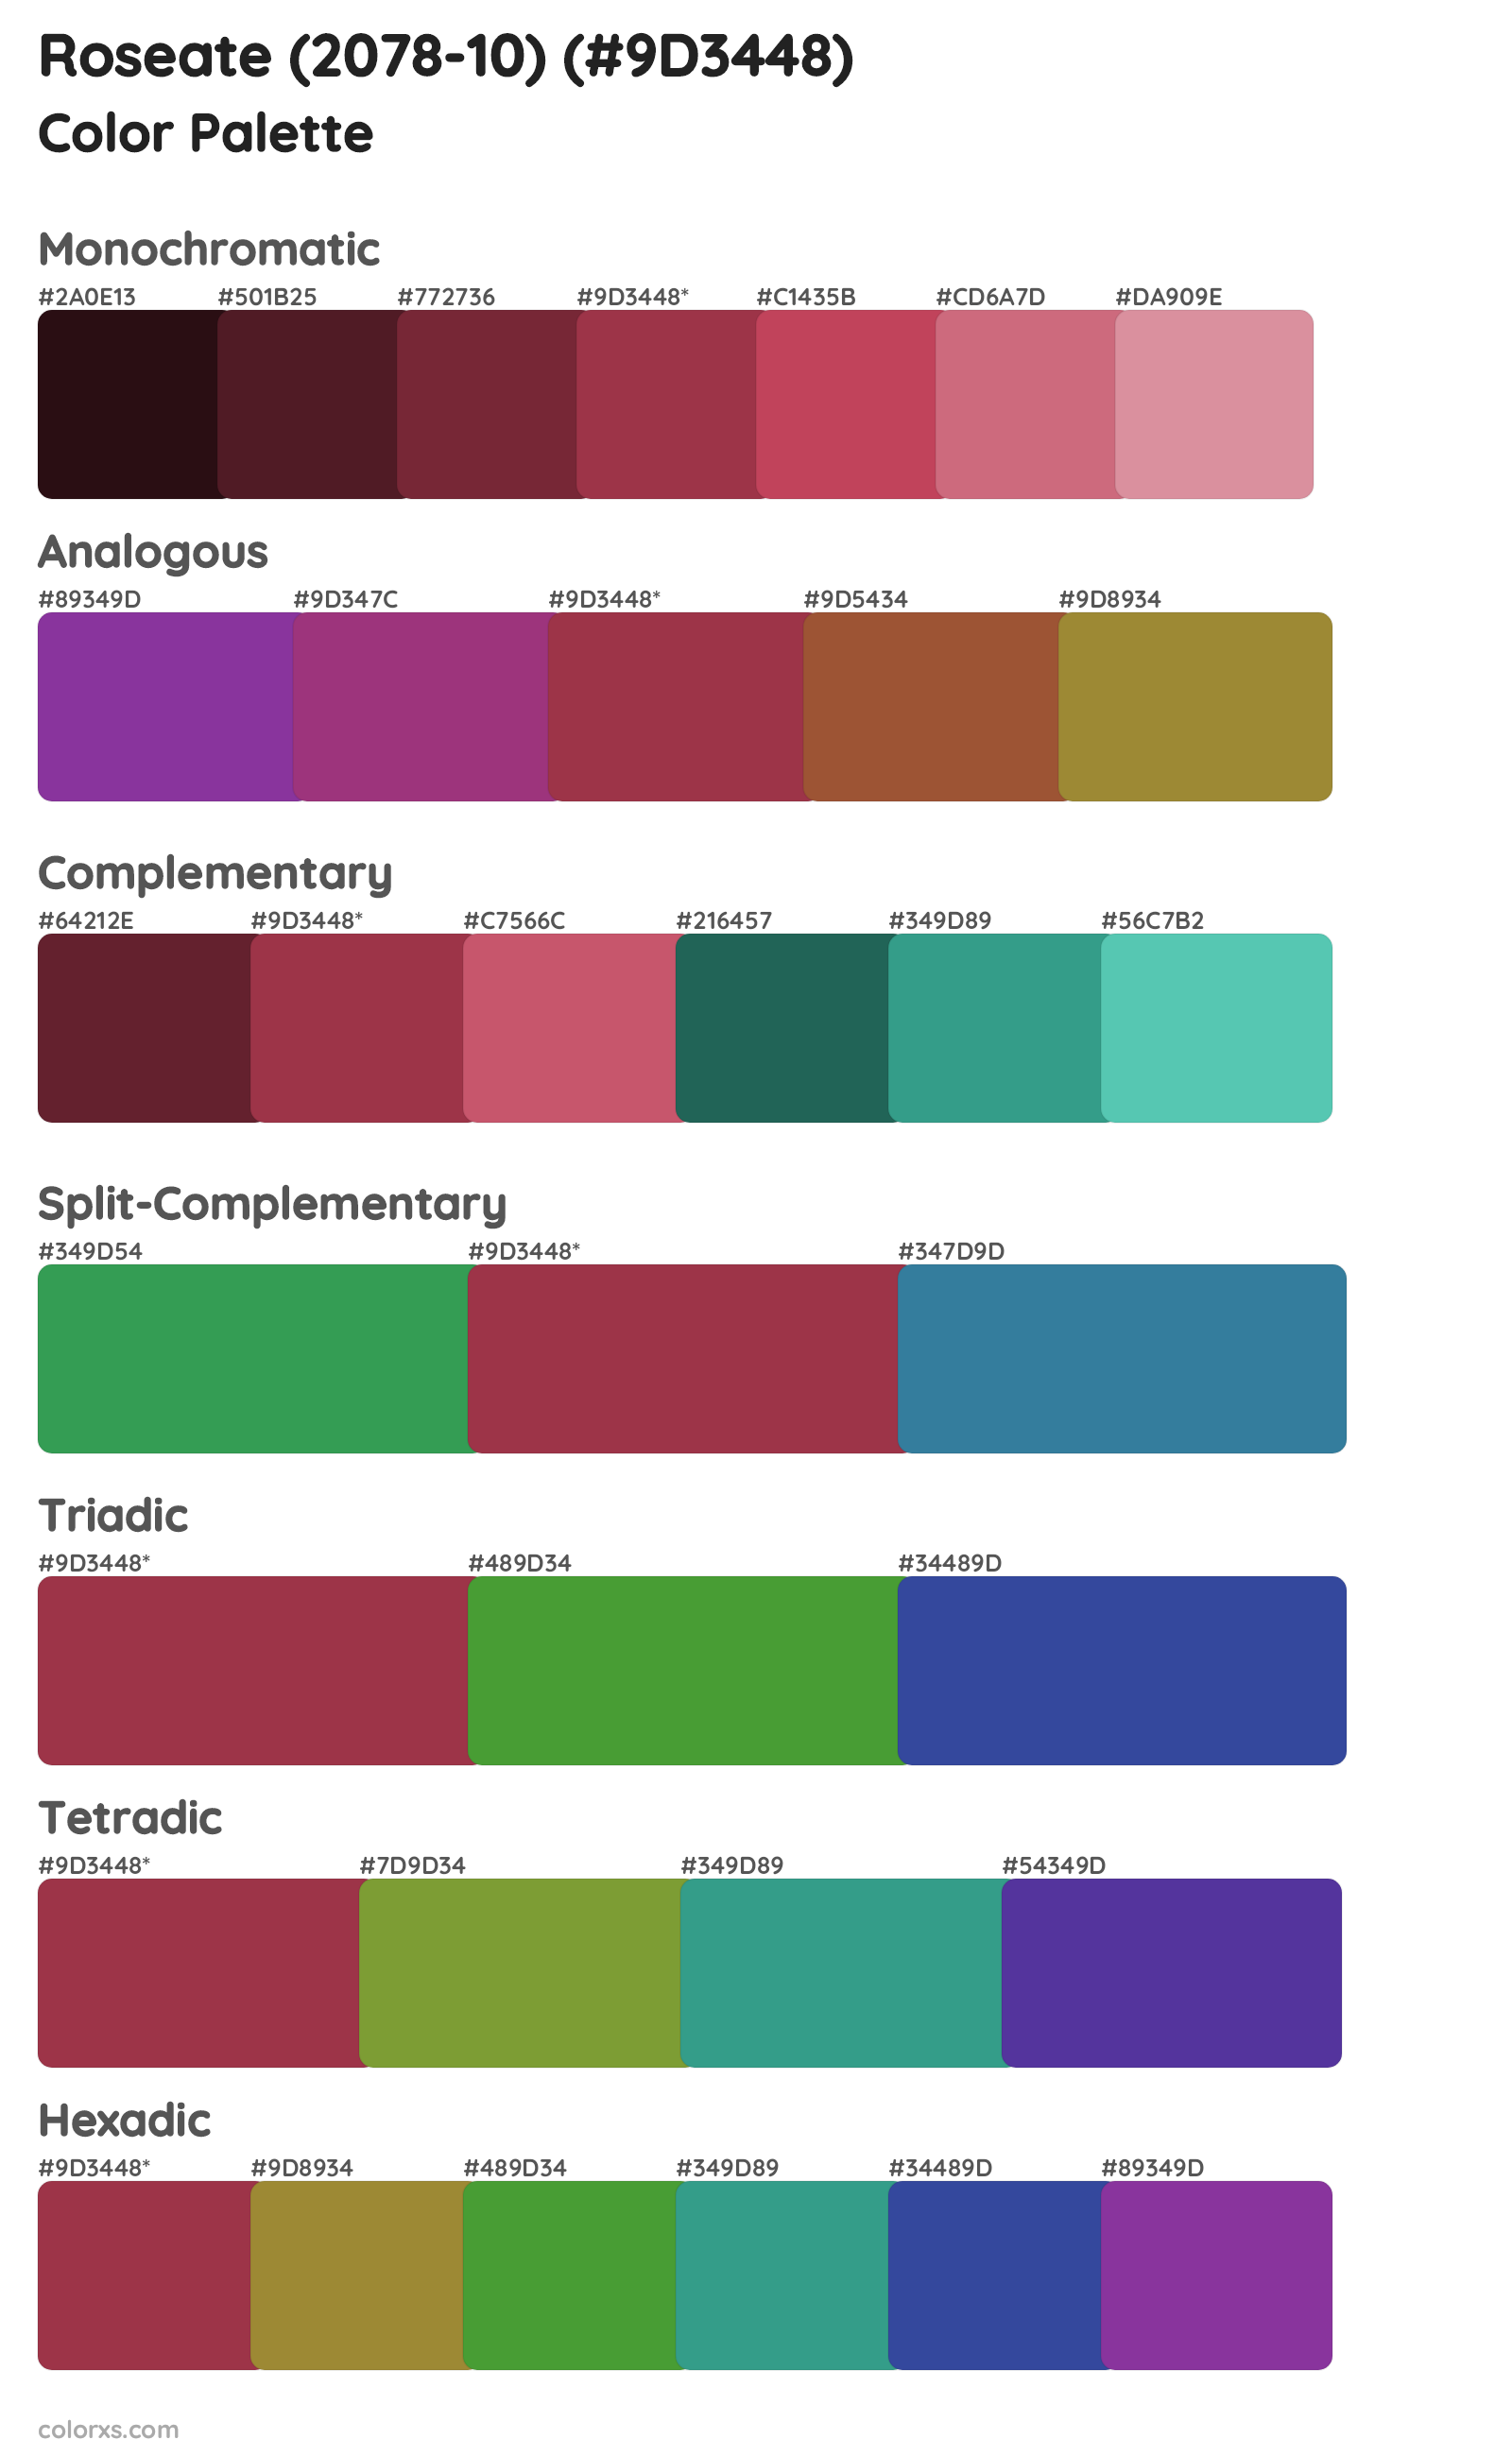 Roseate (2078-10) Color Scheme Palettes